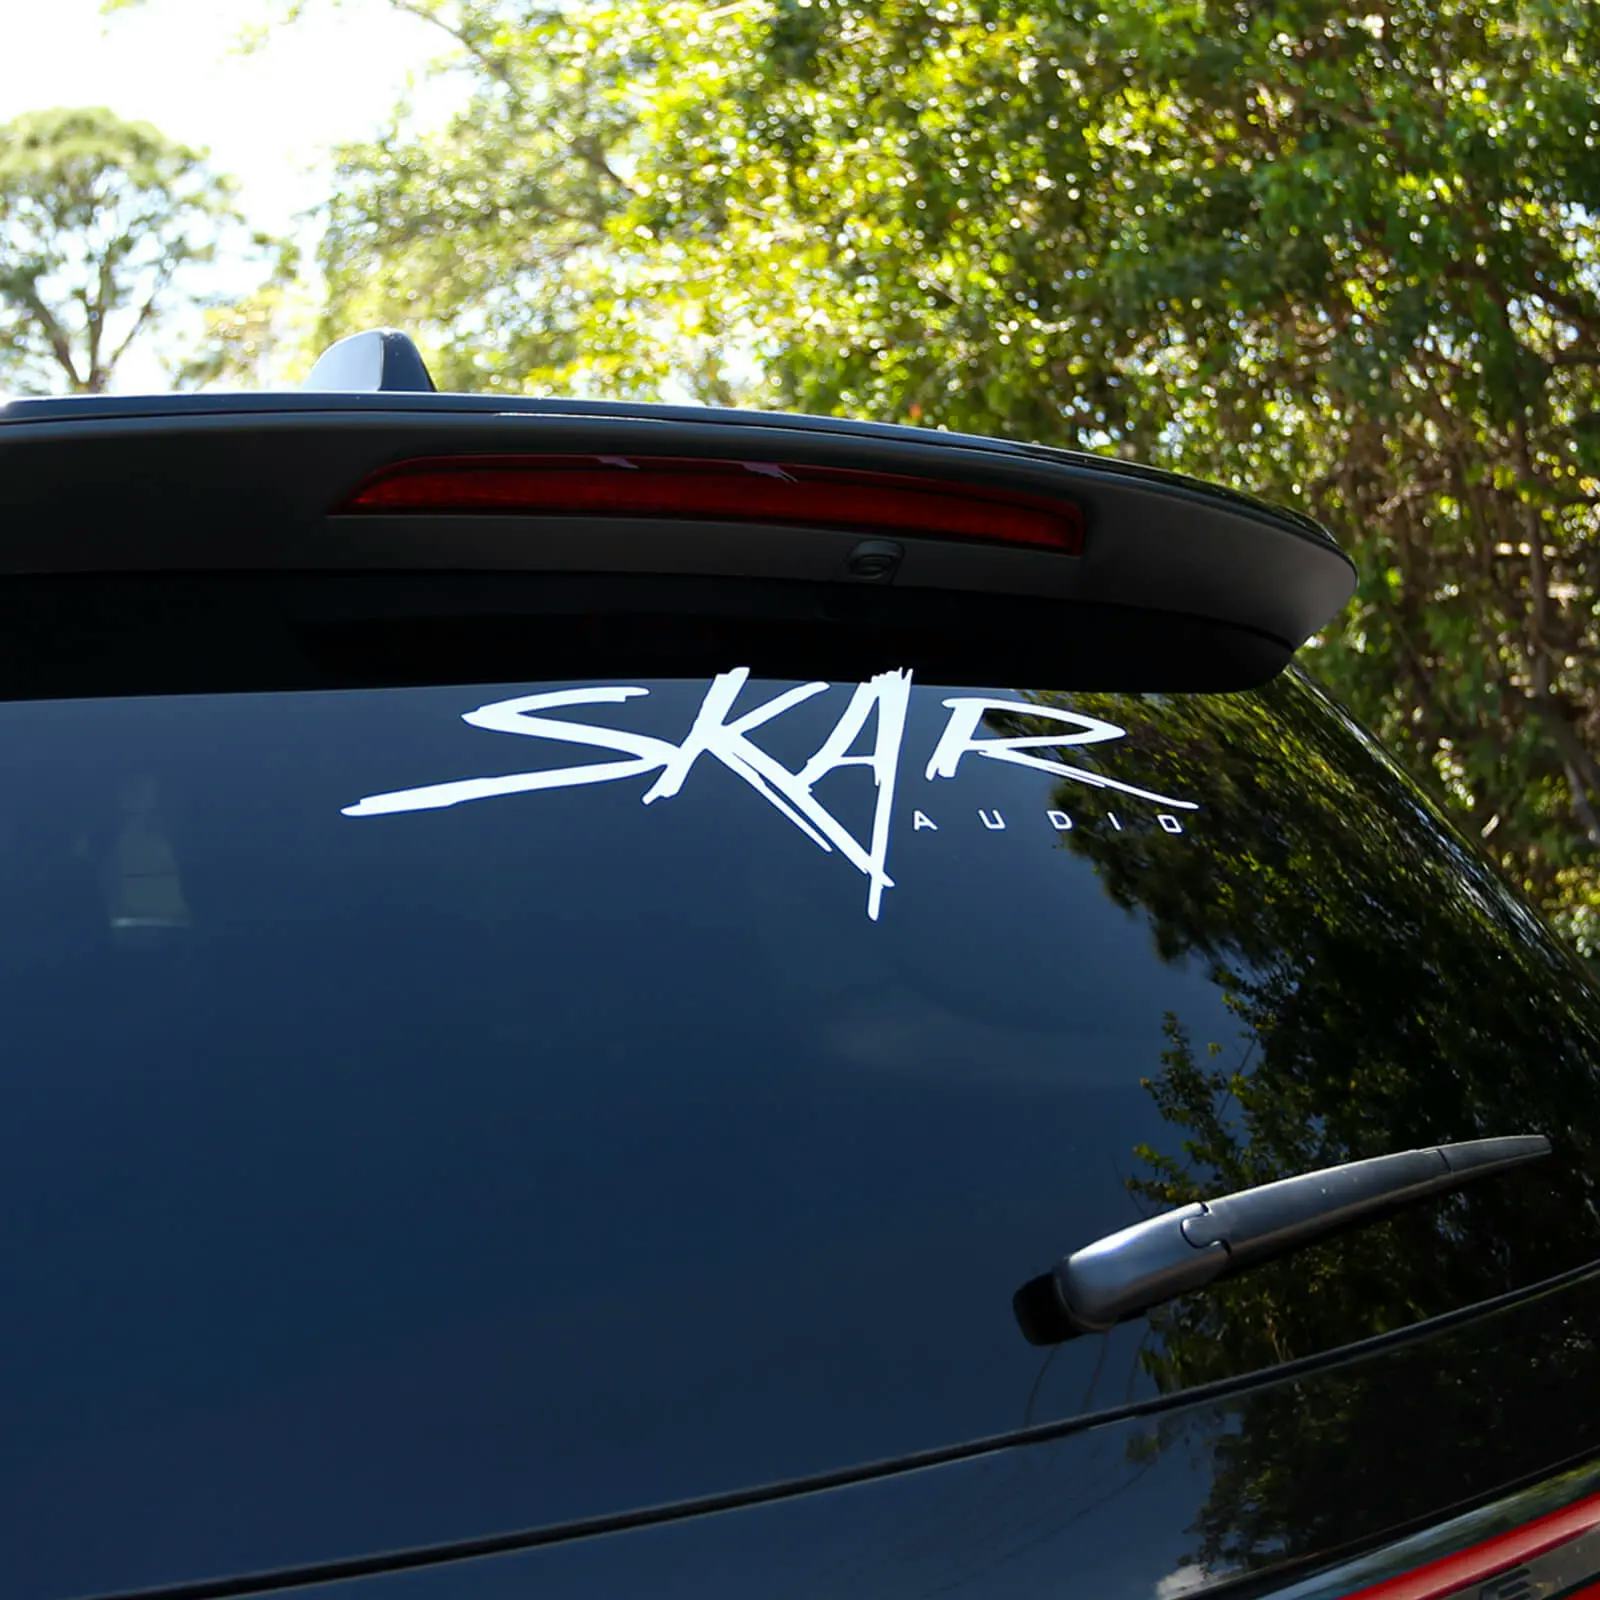 SK-DECAL-LG, 20 x 6 Large Skar Audio Logo Decal